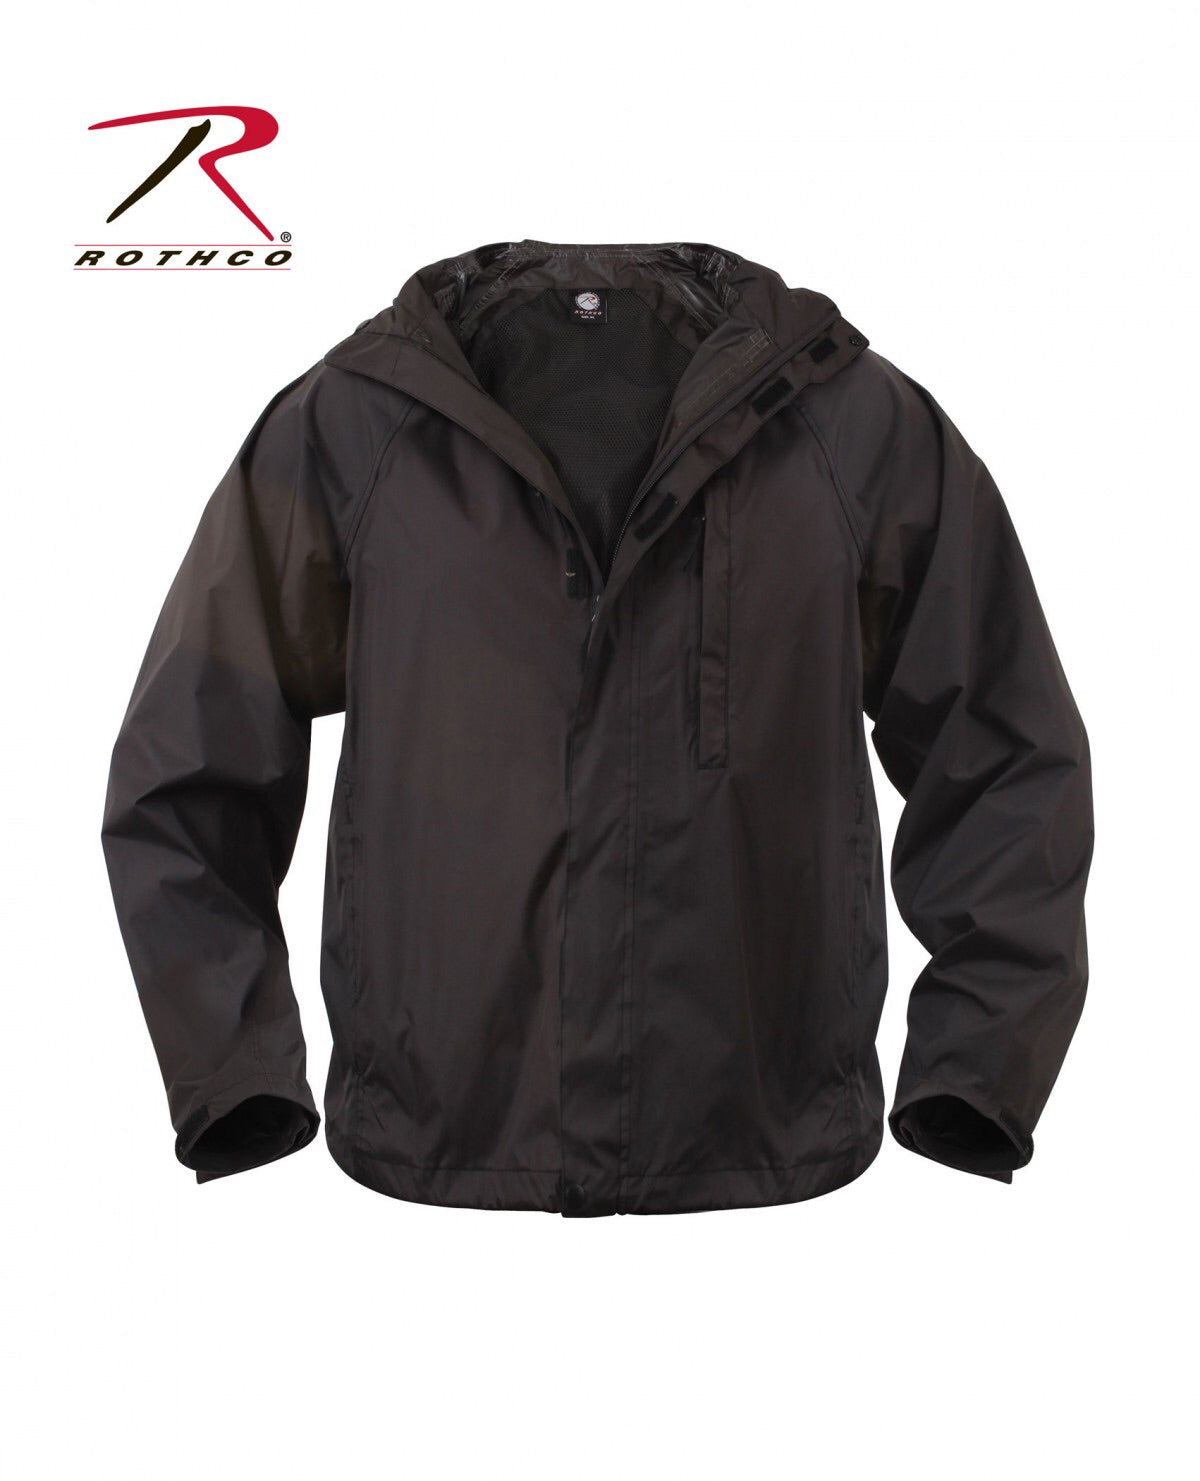 Rothco Packable Rain Jacket Black